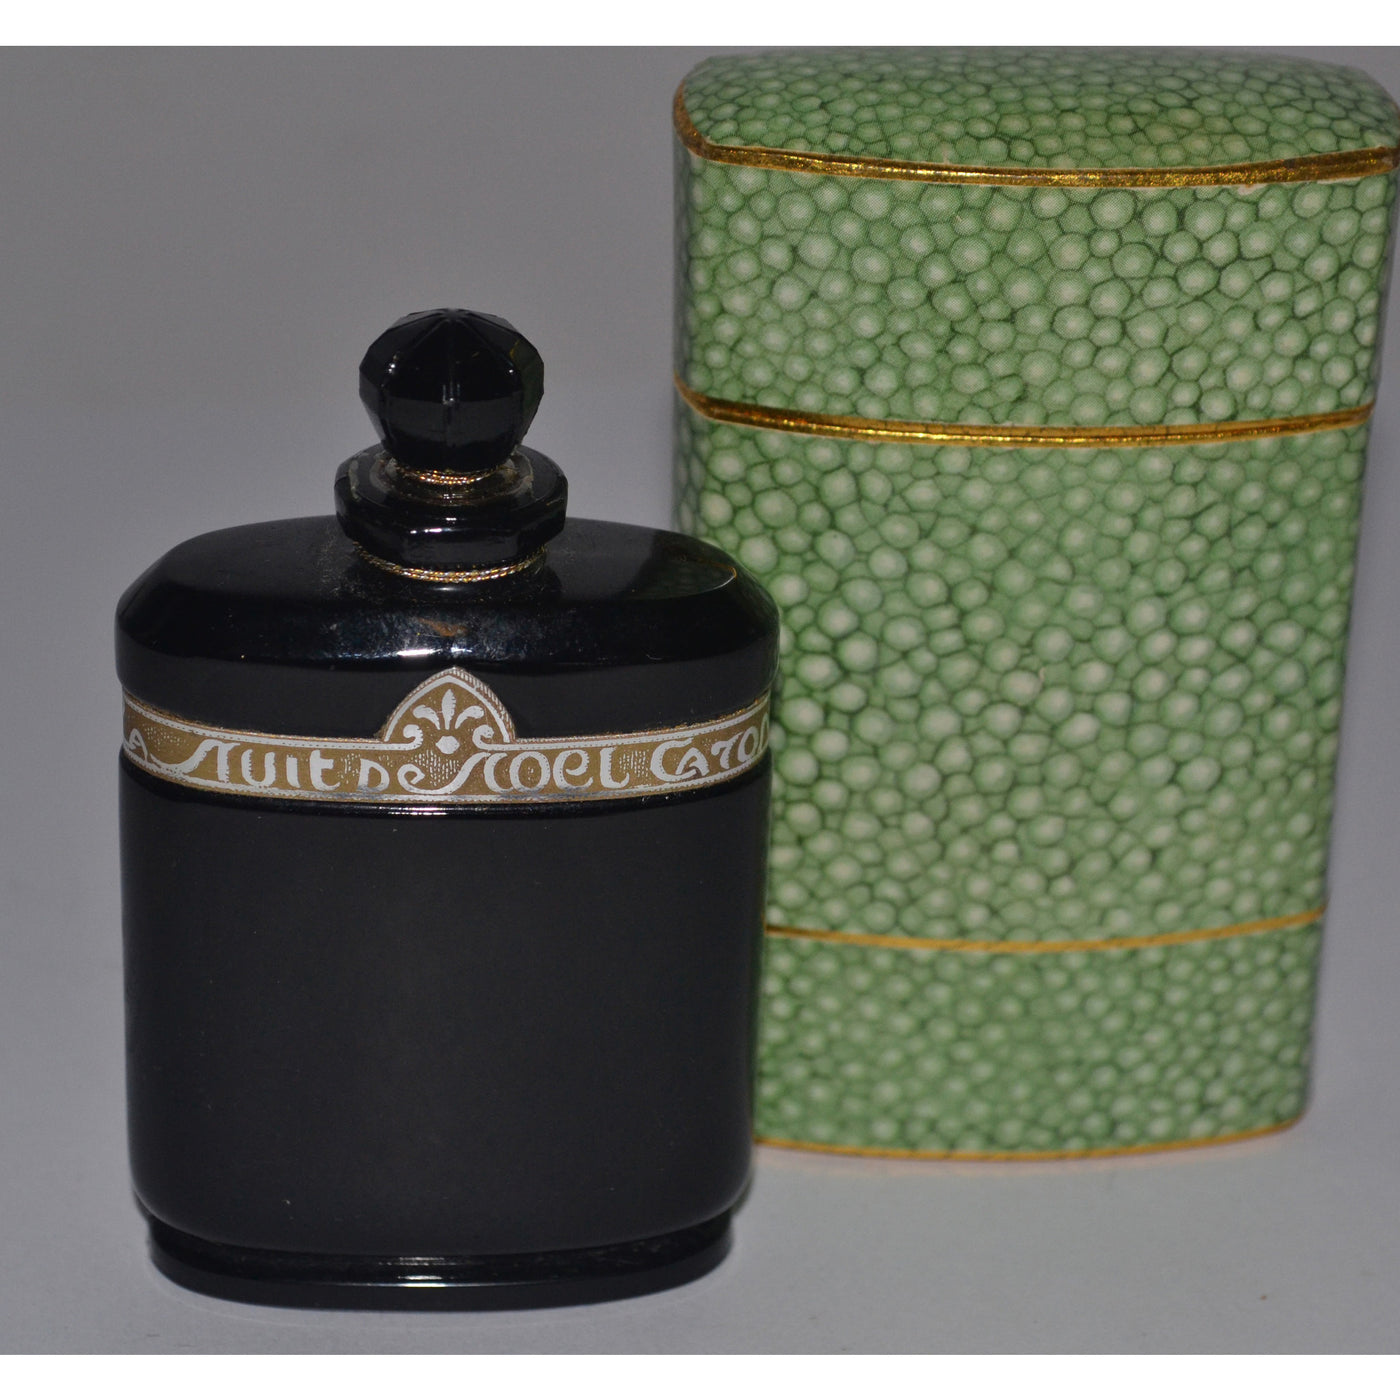 Vintage Caron Nuit De Noel Baccarat Perfume Bottle